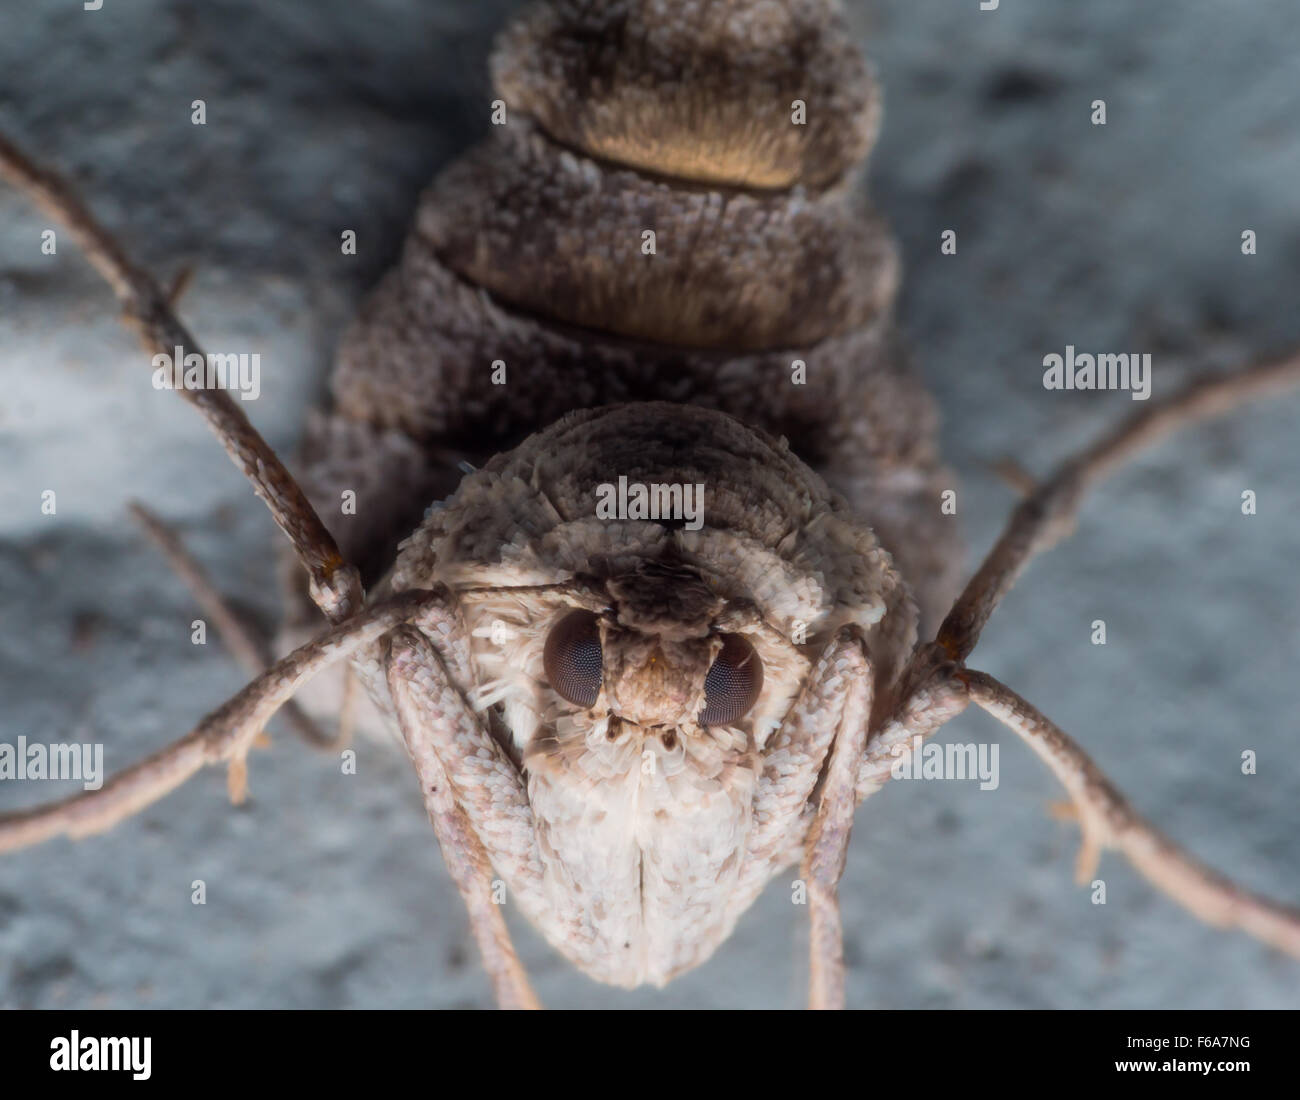 Weibliche Herbst Käfer Motten sind flügellose, Eier zu legen, mit Seide an harten Oberflächen befestigen. Stockfoto